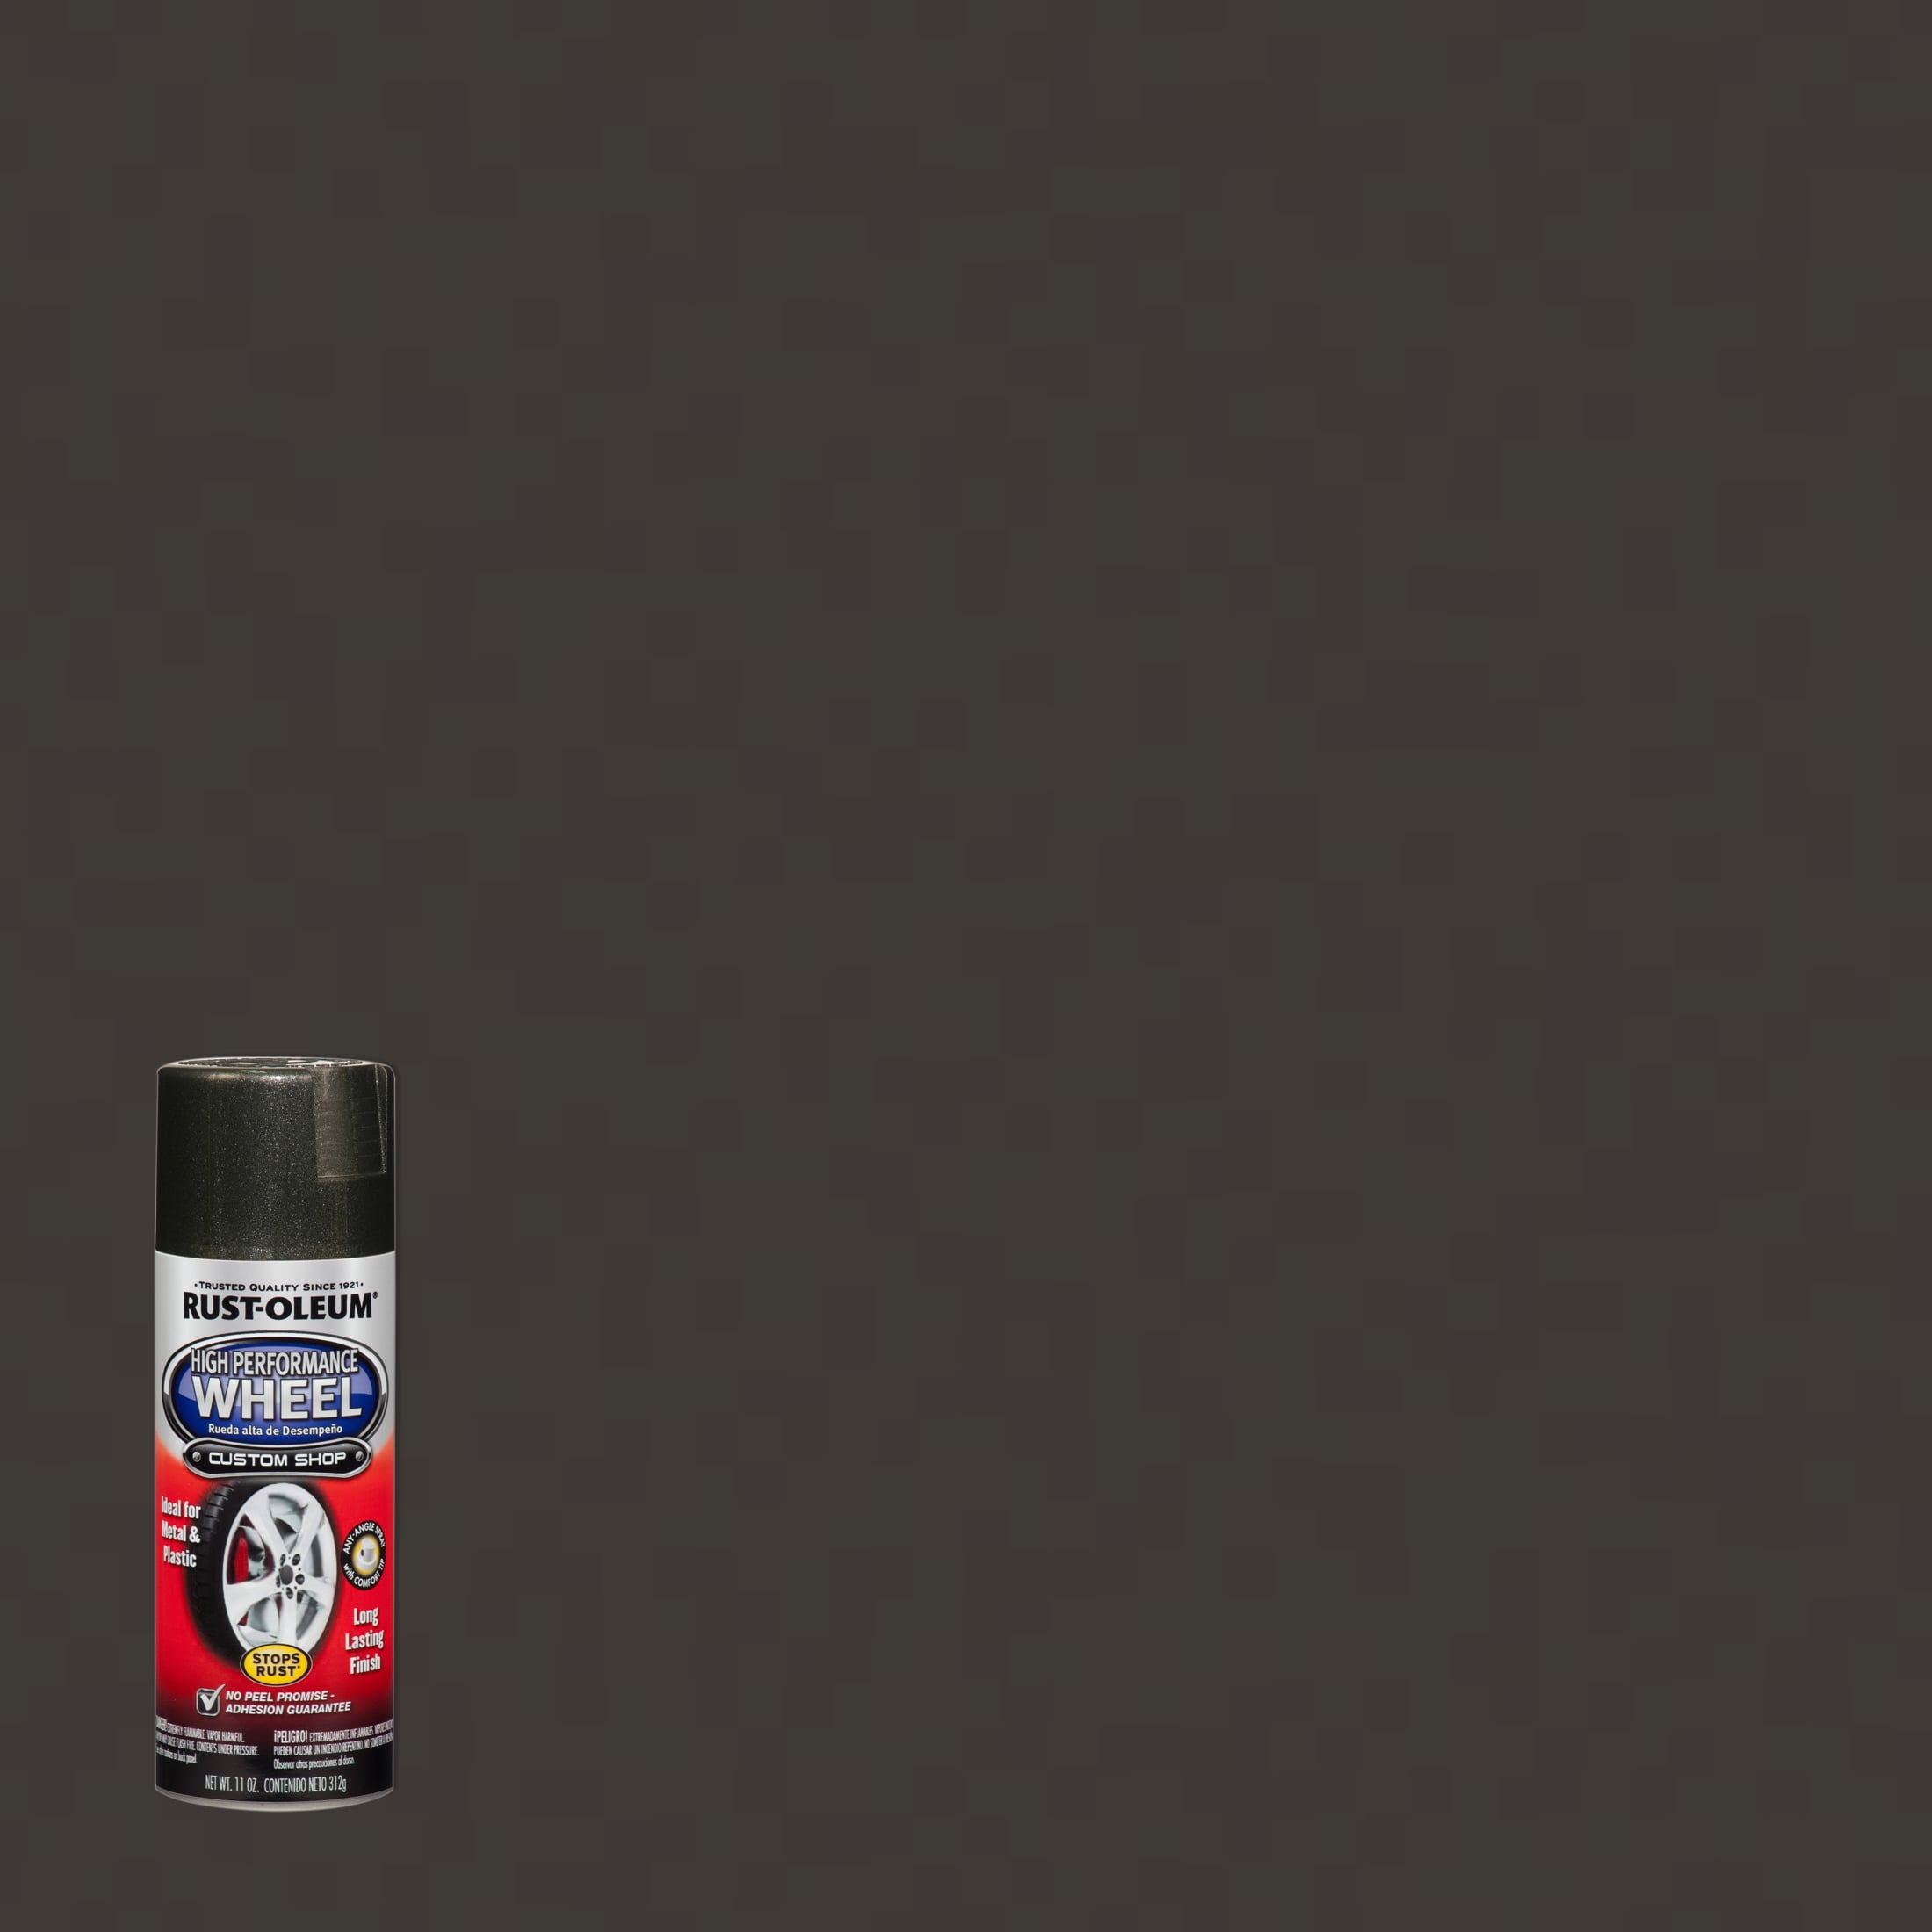 Duplicolor Rubberized Undercoating Spray Paint: Black, Aerosol, 16 Oz UC101  - Advance Auto Parts